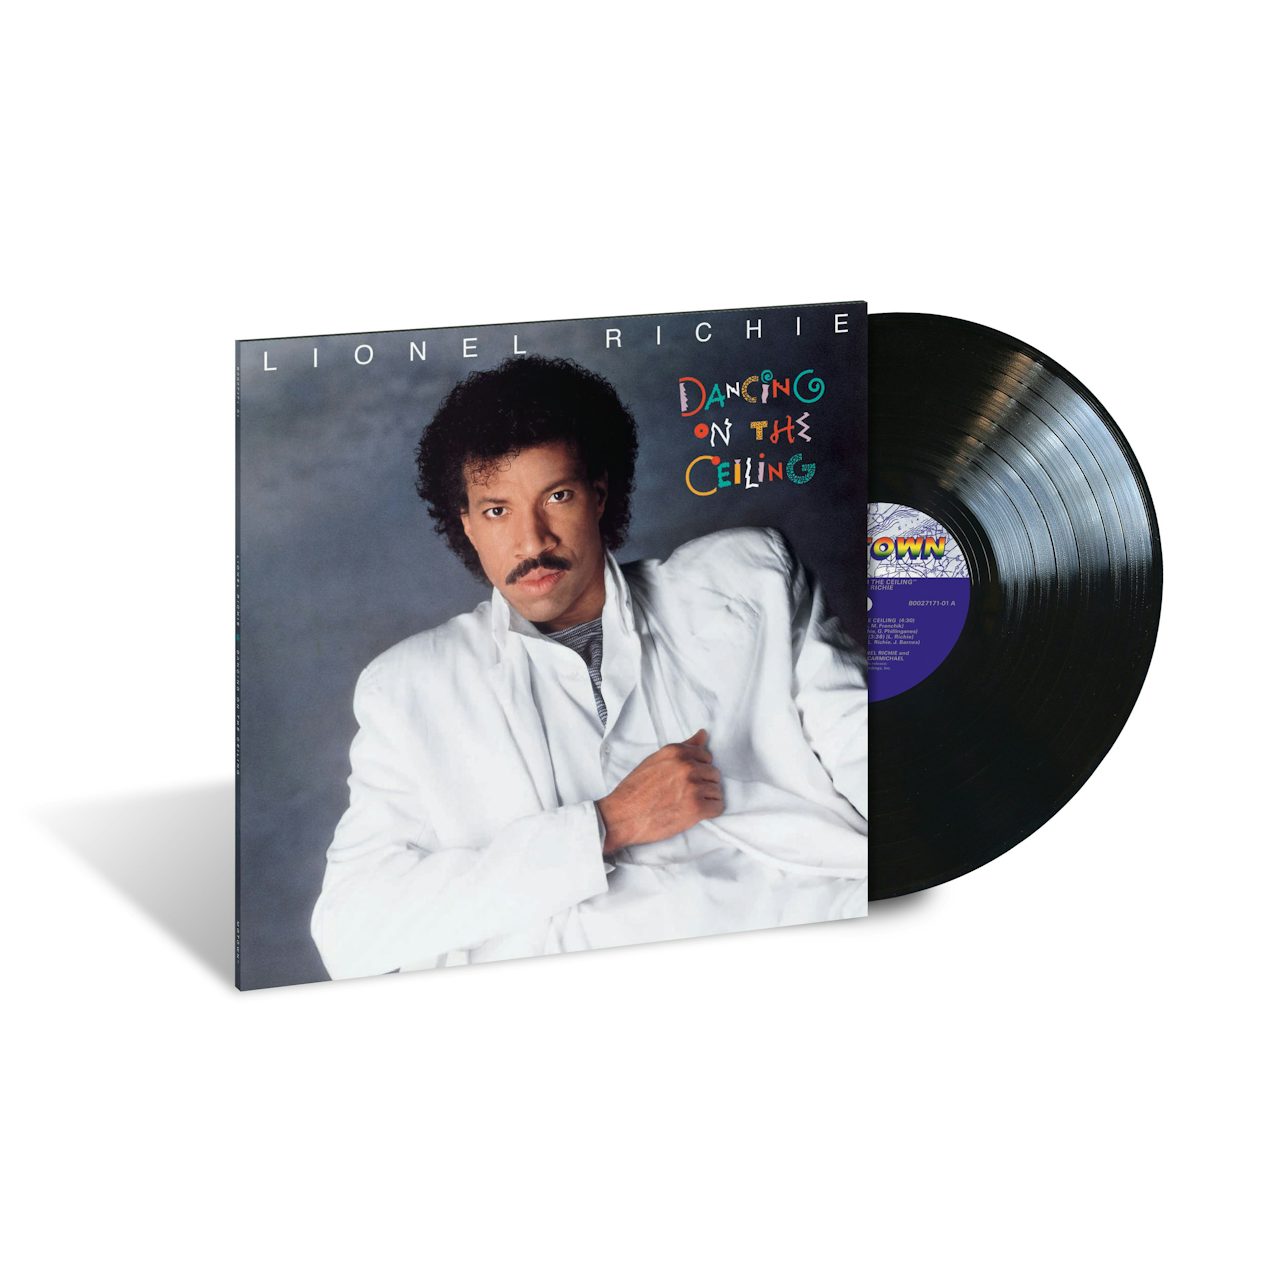 Lionel Richie Dancing On The Ceiling Vinyl